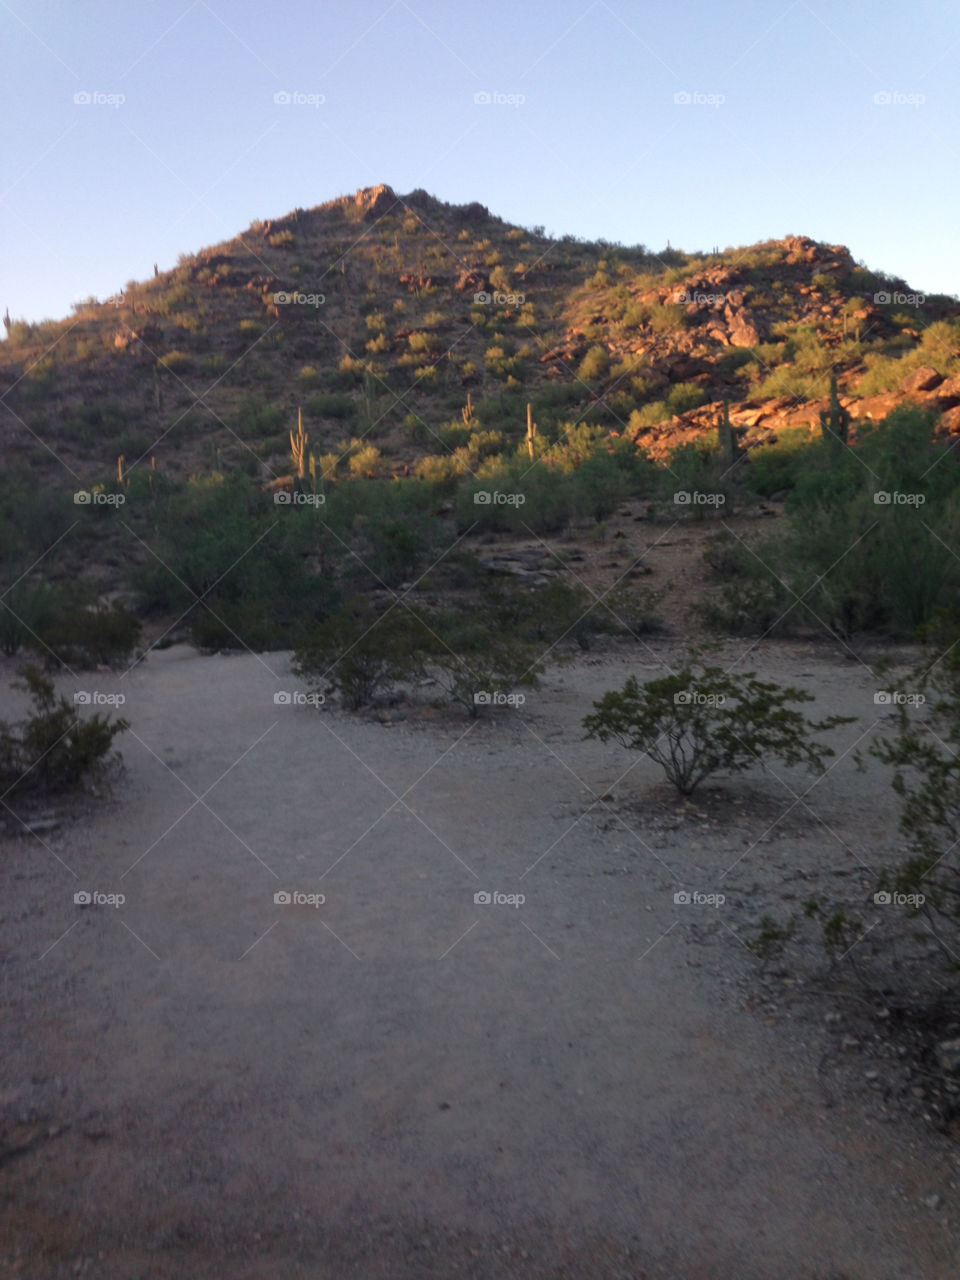 Sonoran desert trail